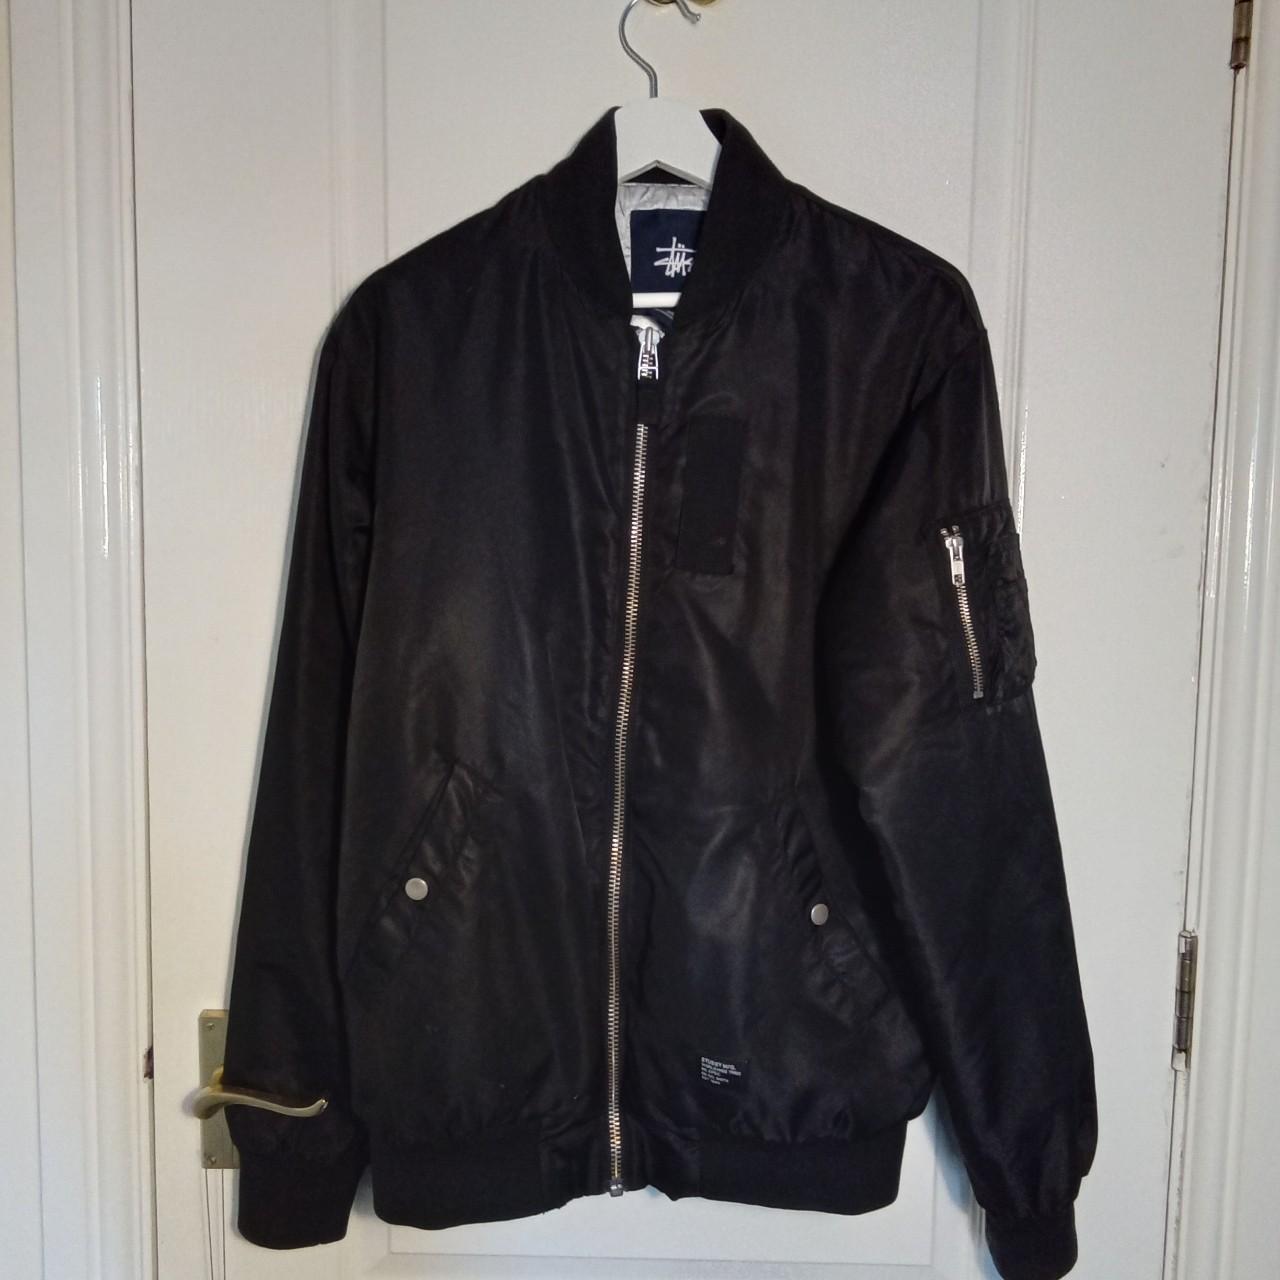 Stüssy bomber jacket in black Reduced price due to... - Depop